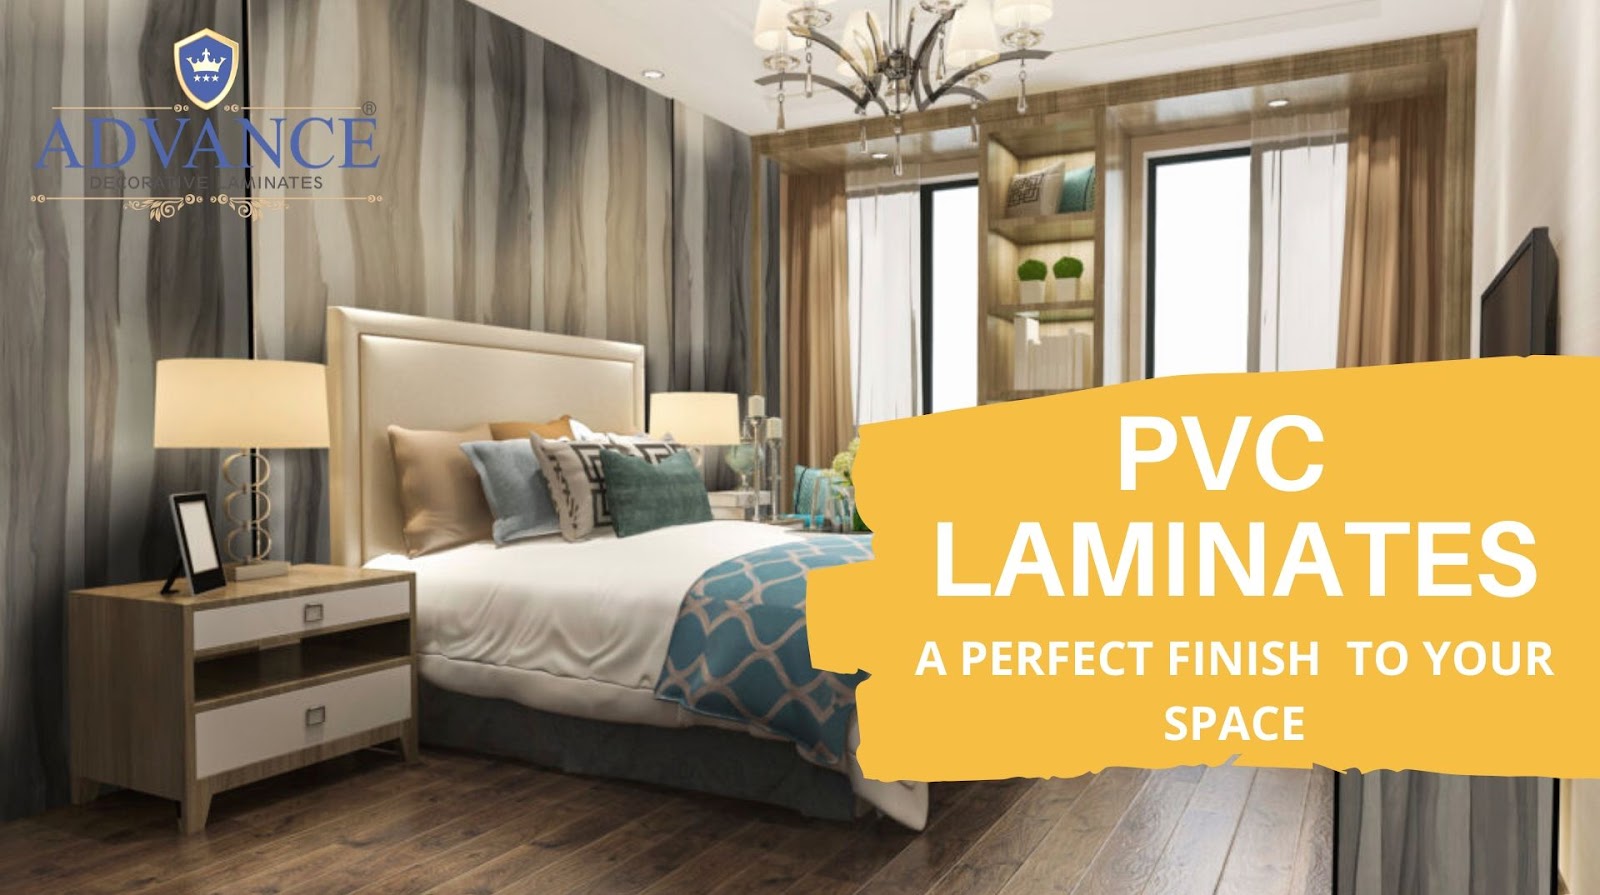 Best Places To Use Advance PVC Laminates